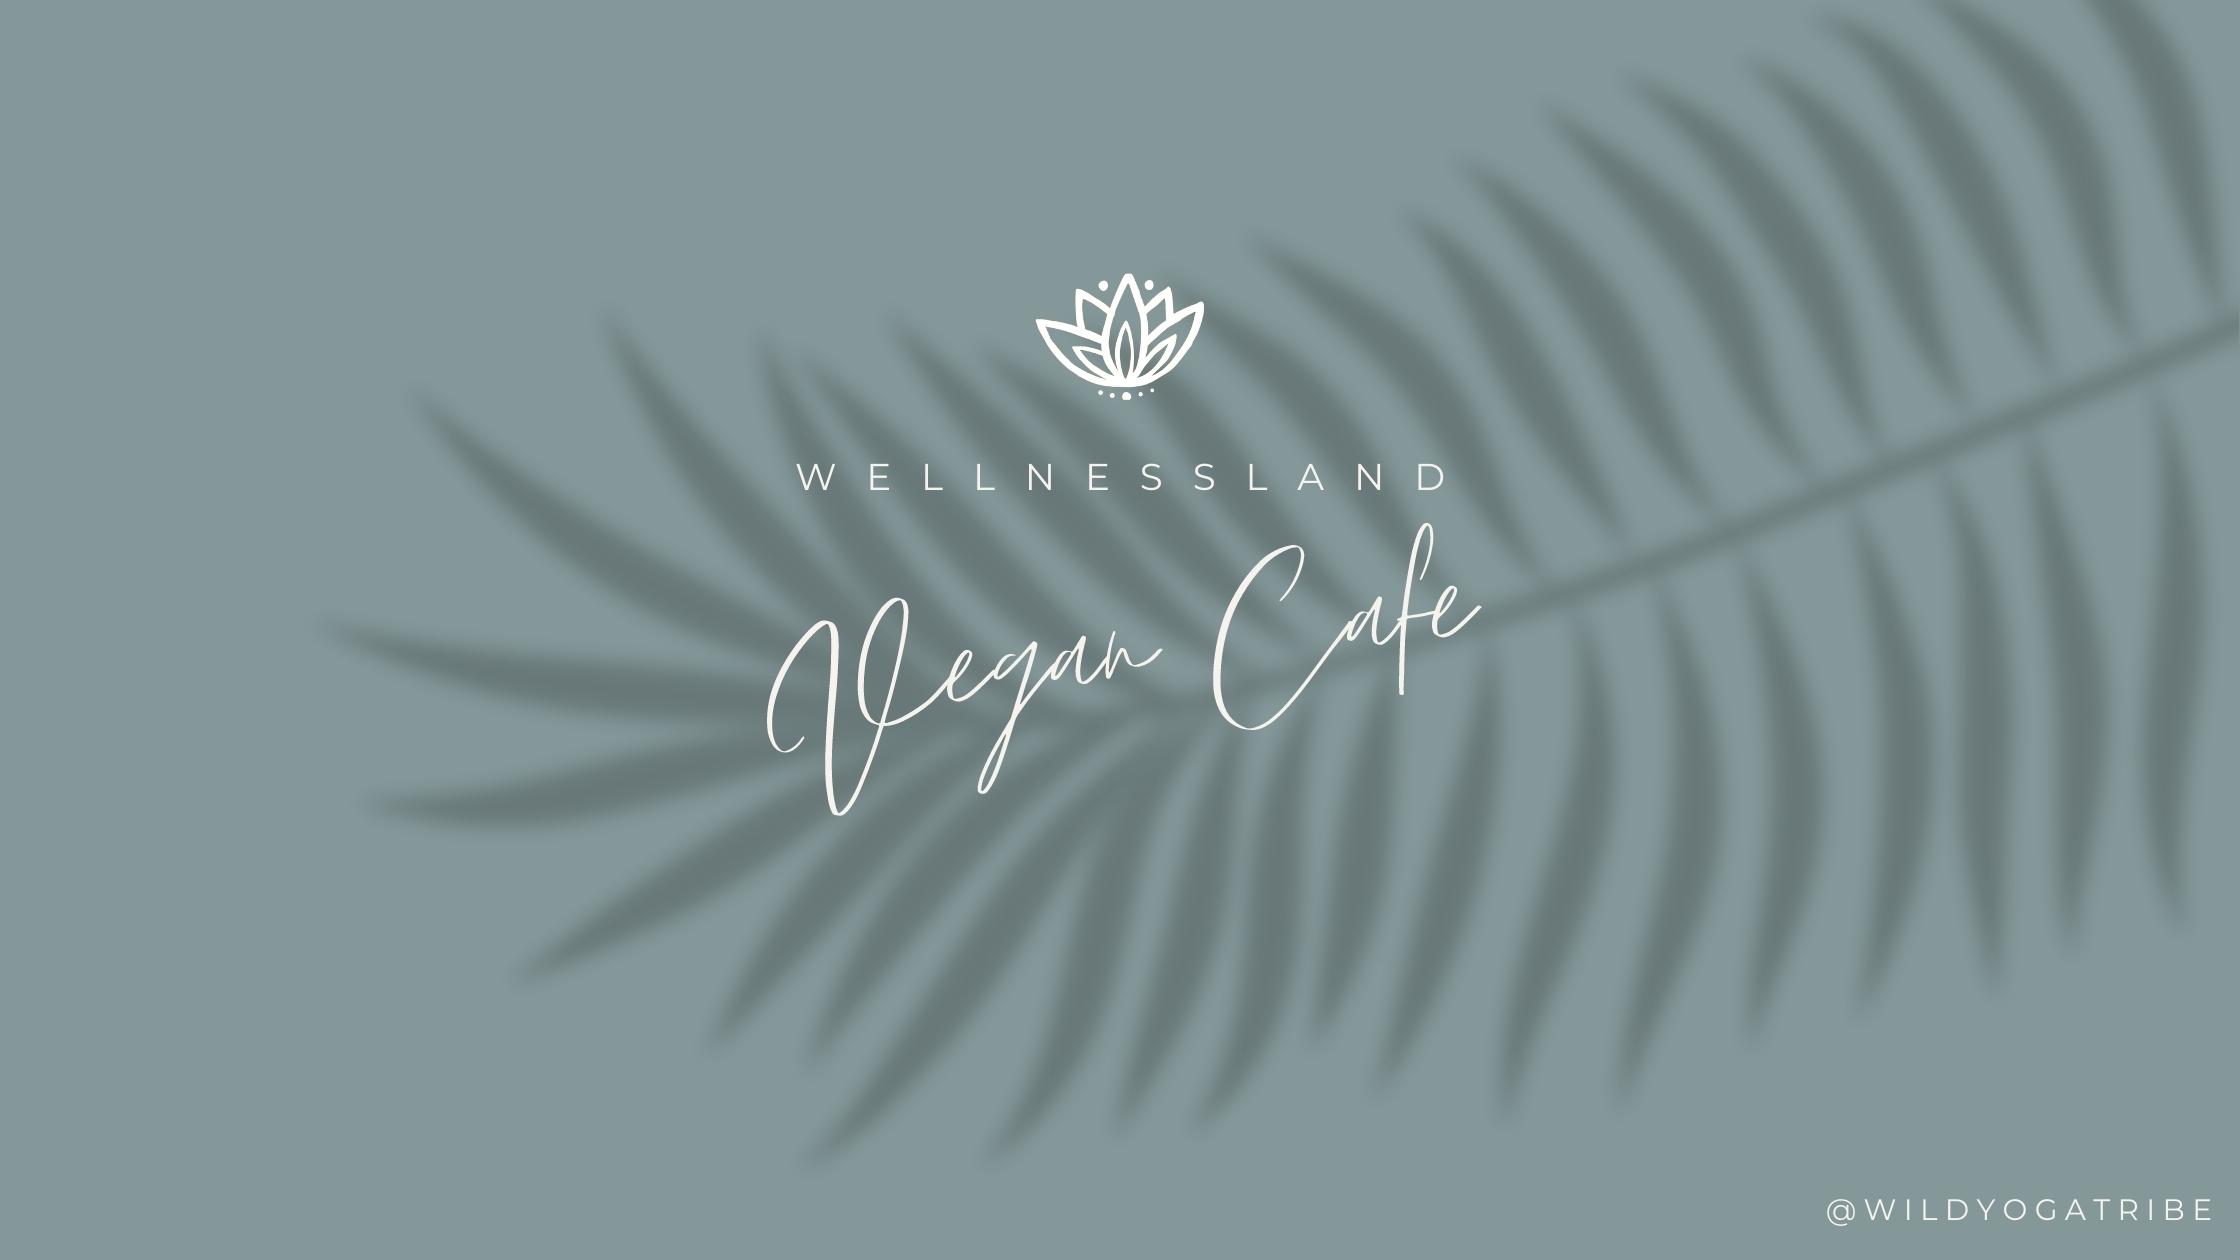 Wellnessland Vegan Cafe